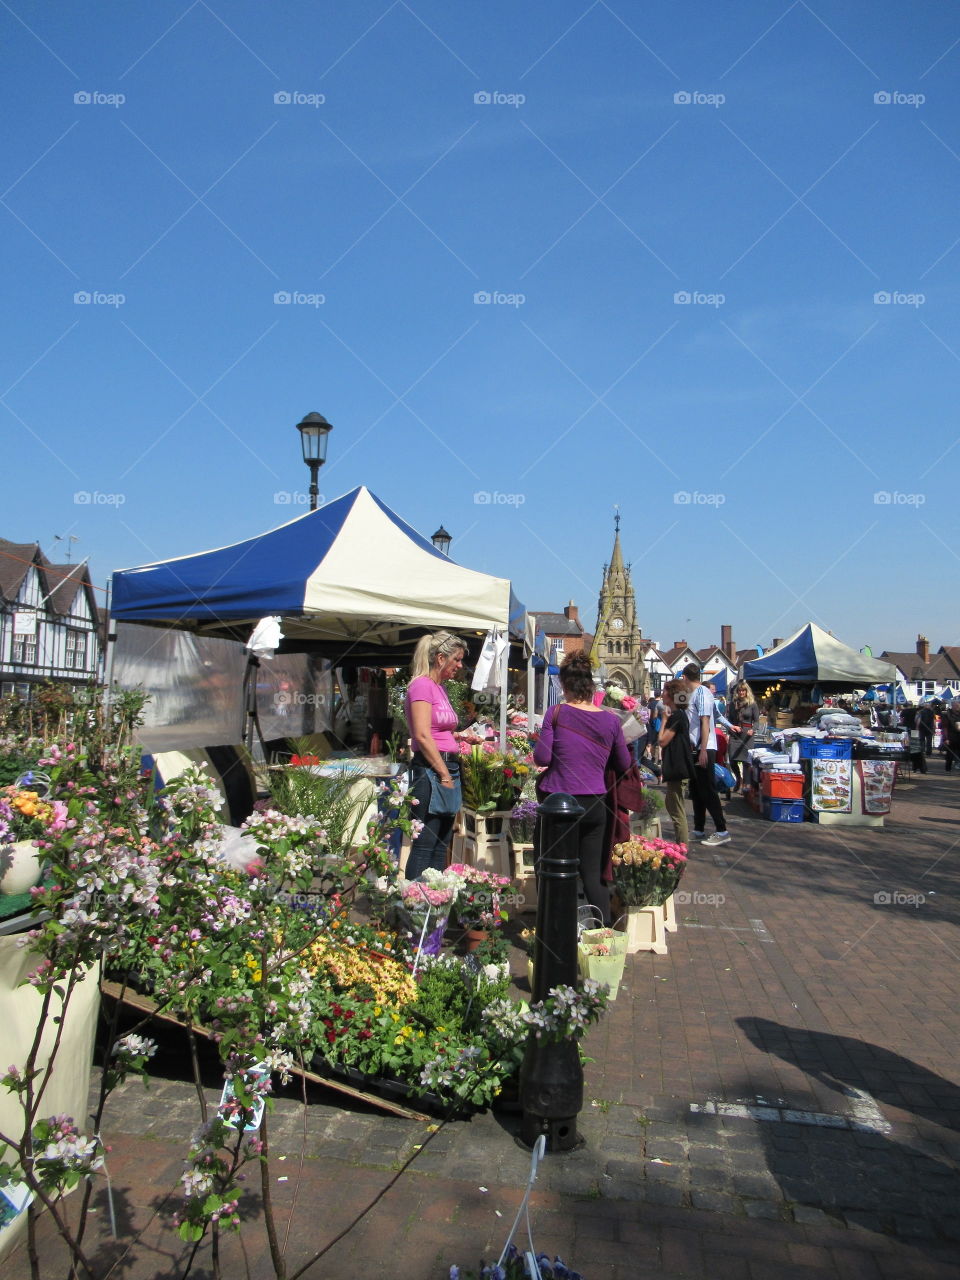 Stratford upon Avon market stalls